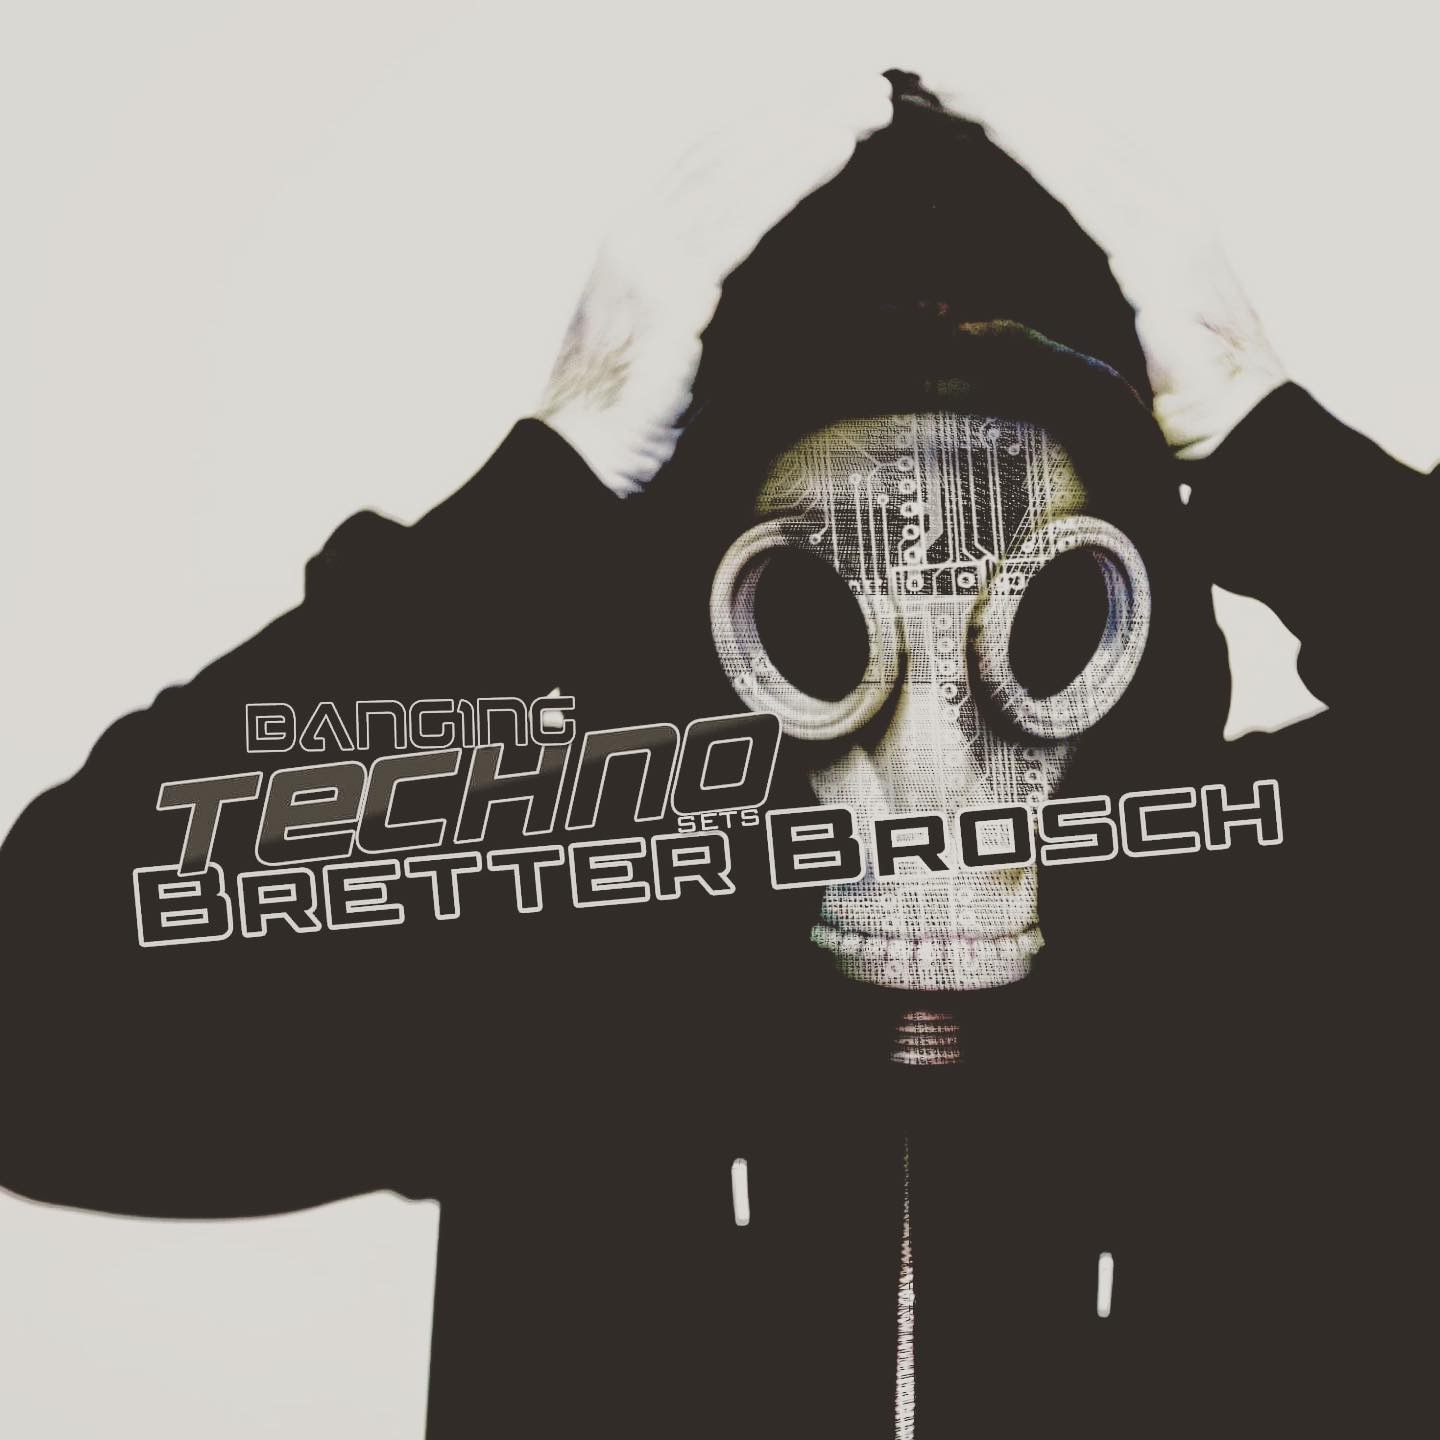 Bretter Brosch @ Banging Techno sets 237 - Banging Techno sets ...